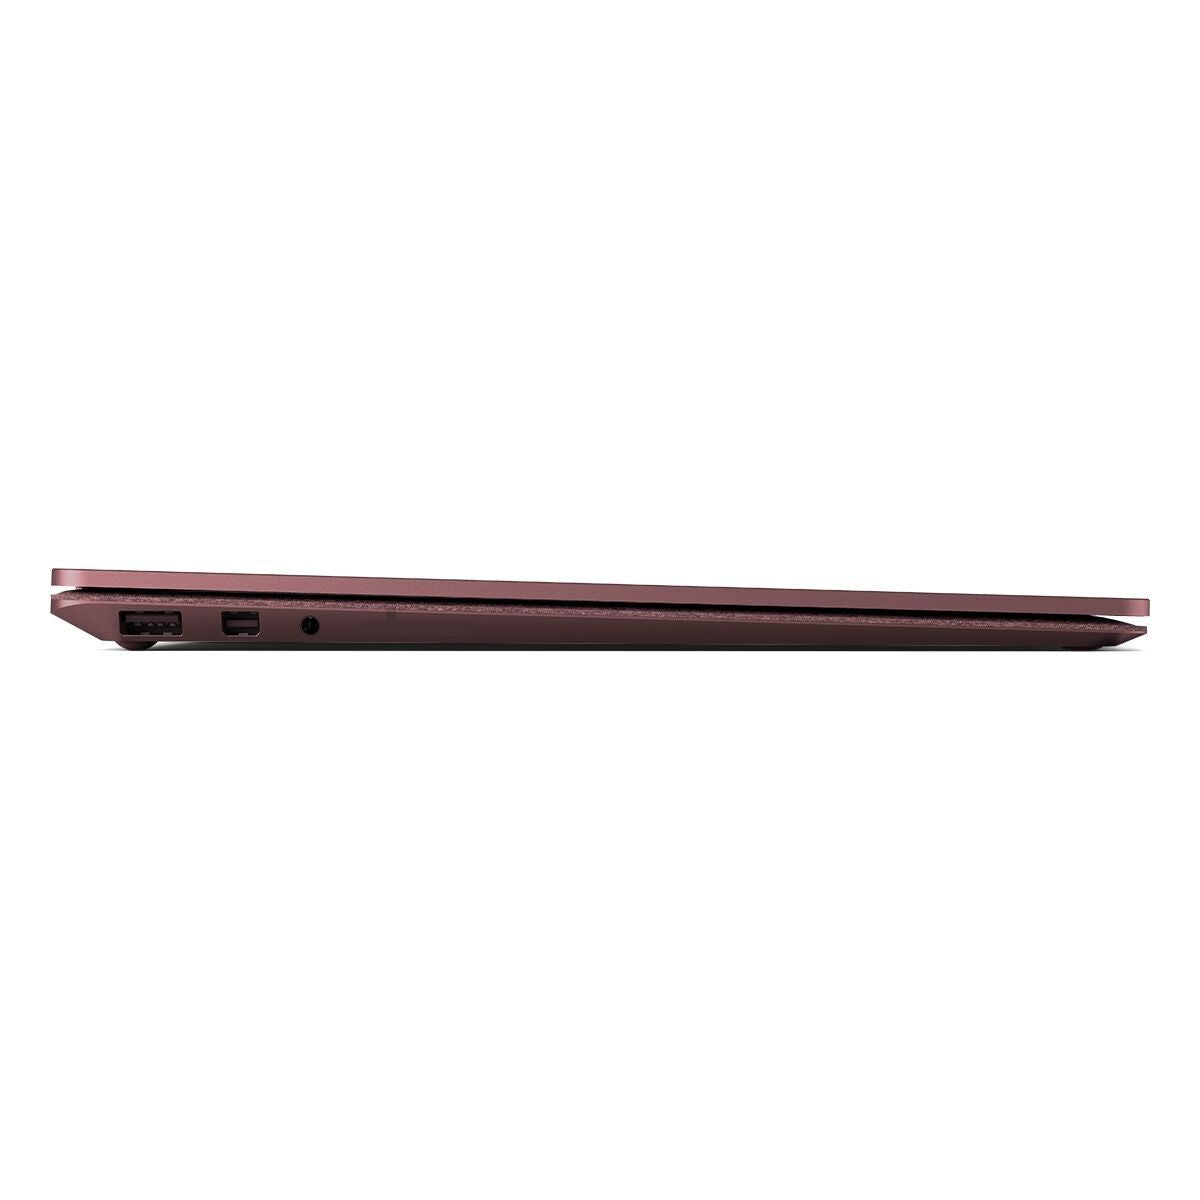 Microsoft Surface Laptop 2 Core i5 8GB 256GB - Burgundy - LQN-00024